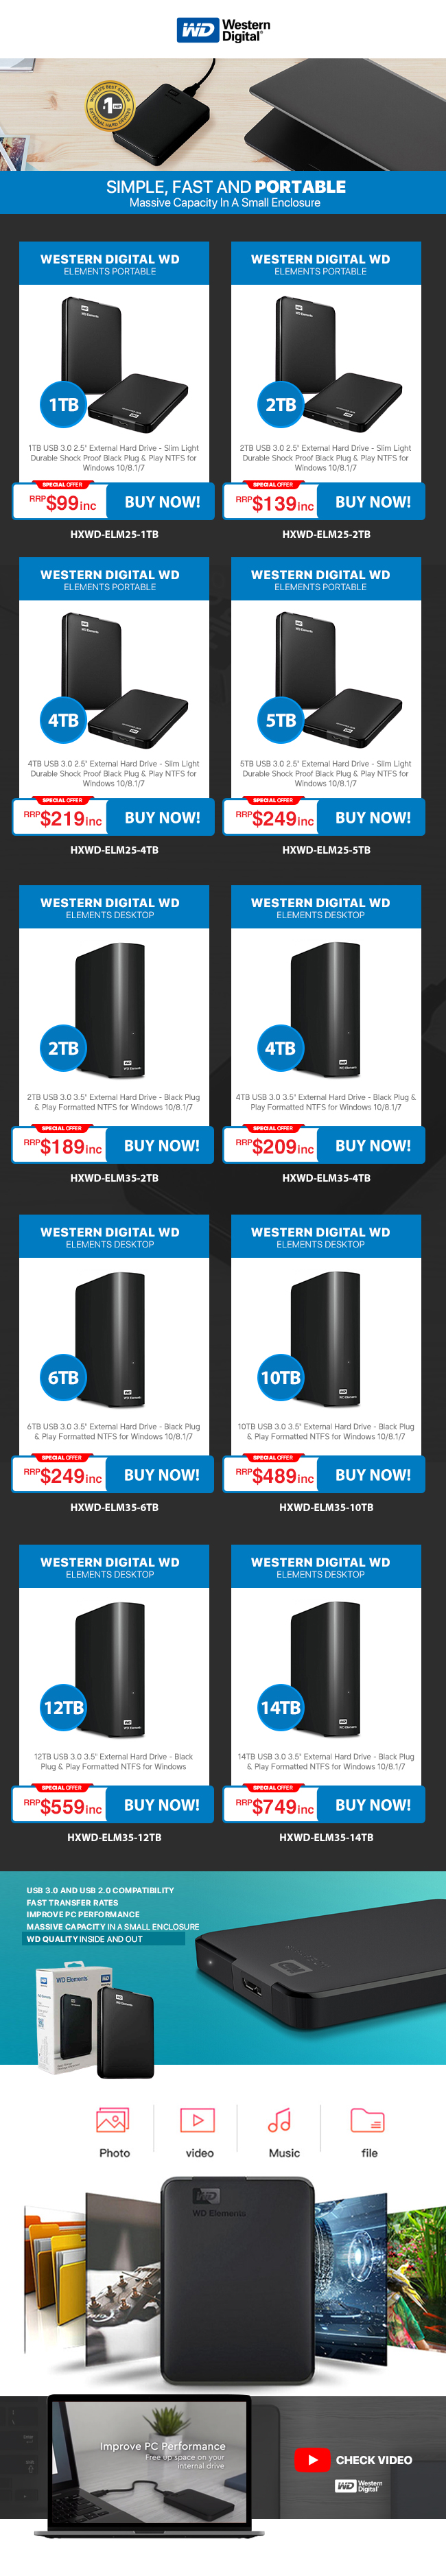 Western Digital Special Offer